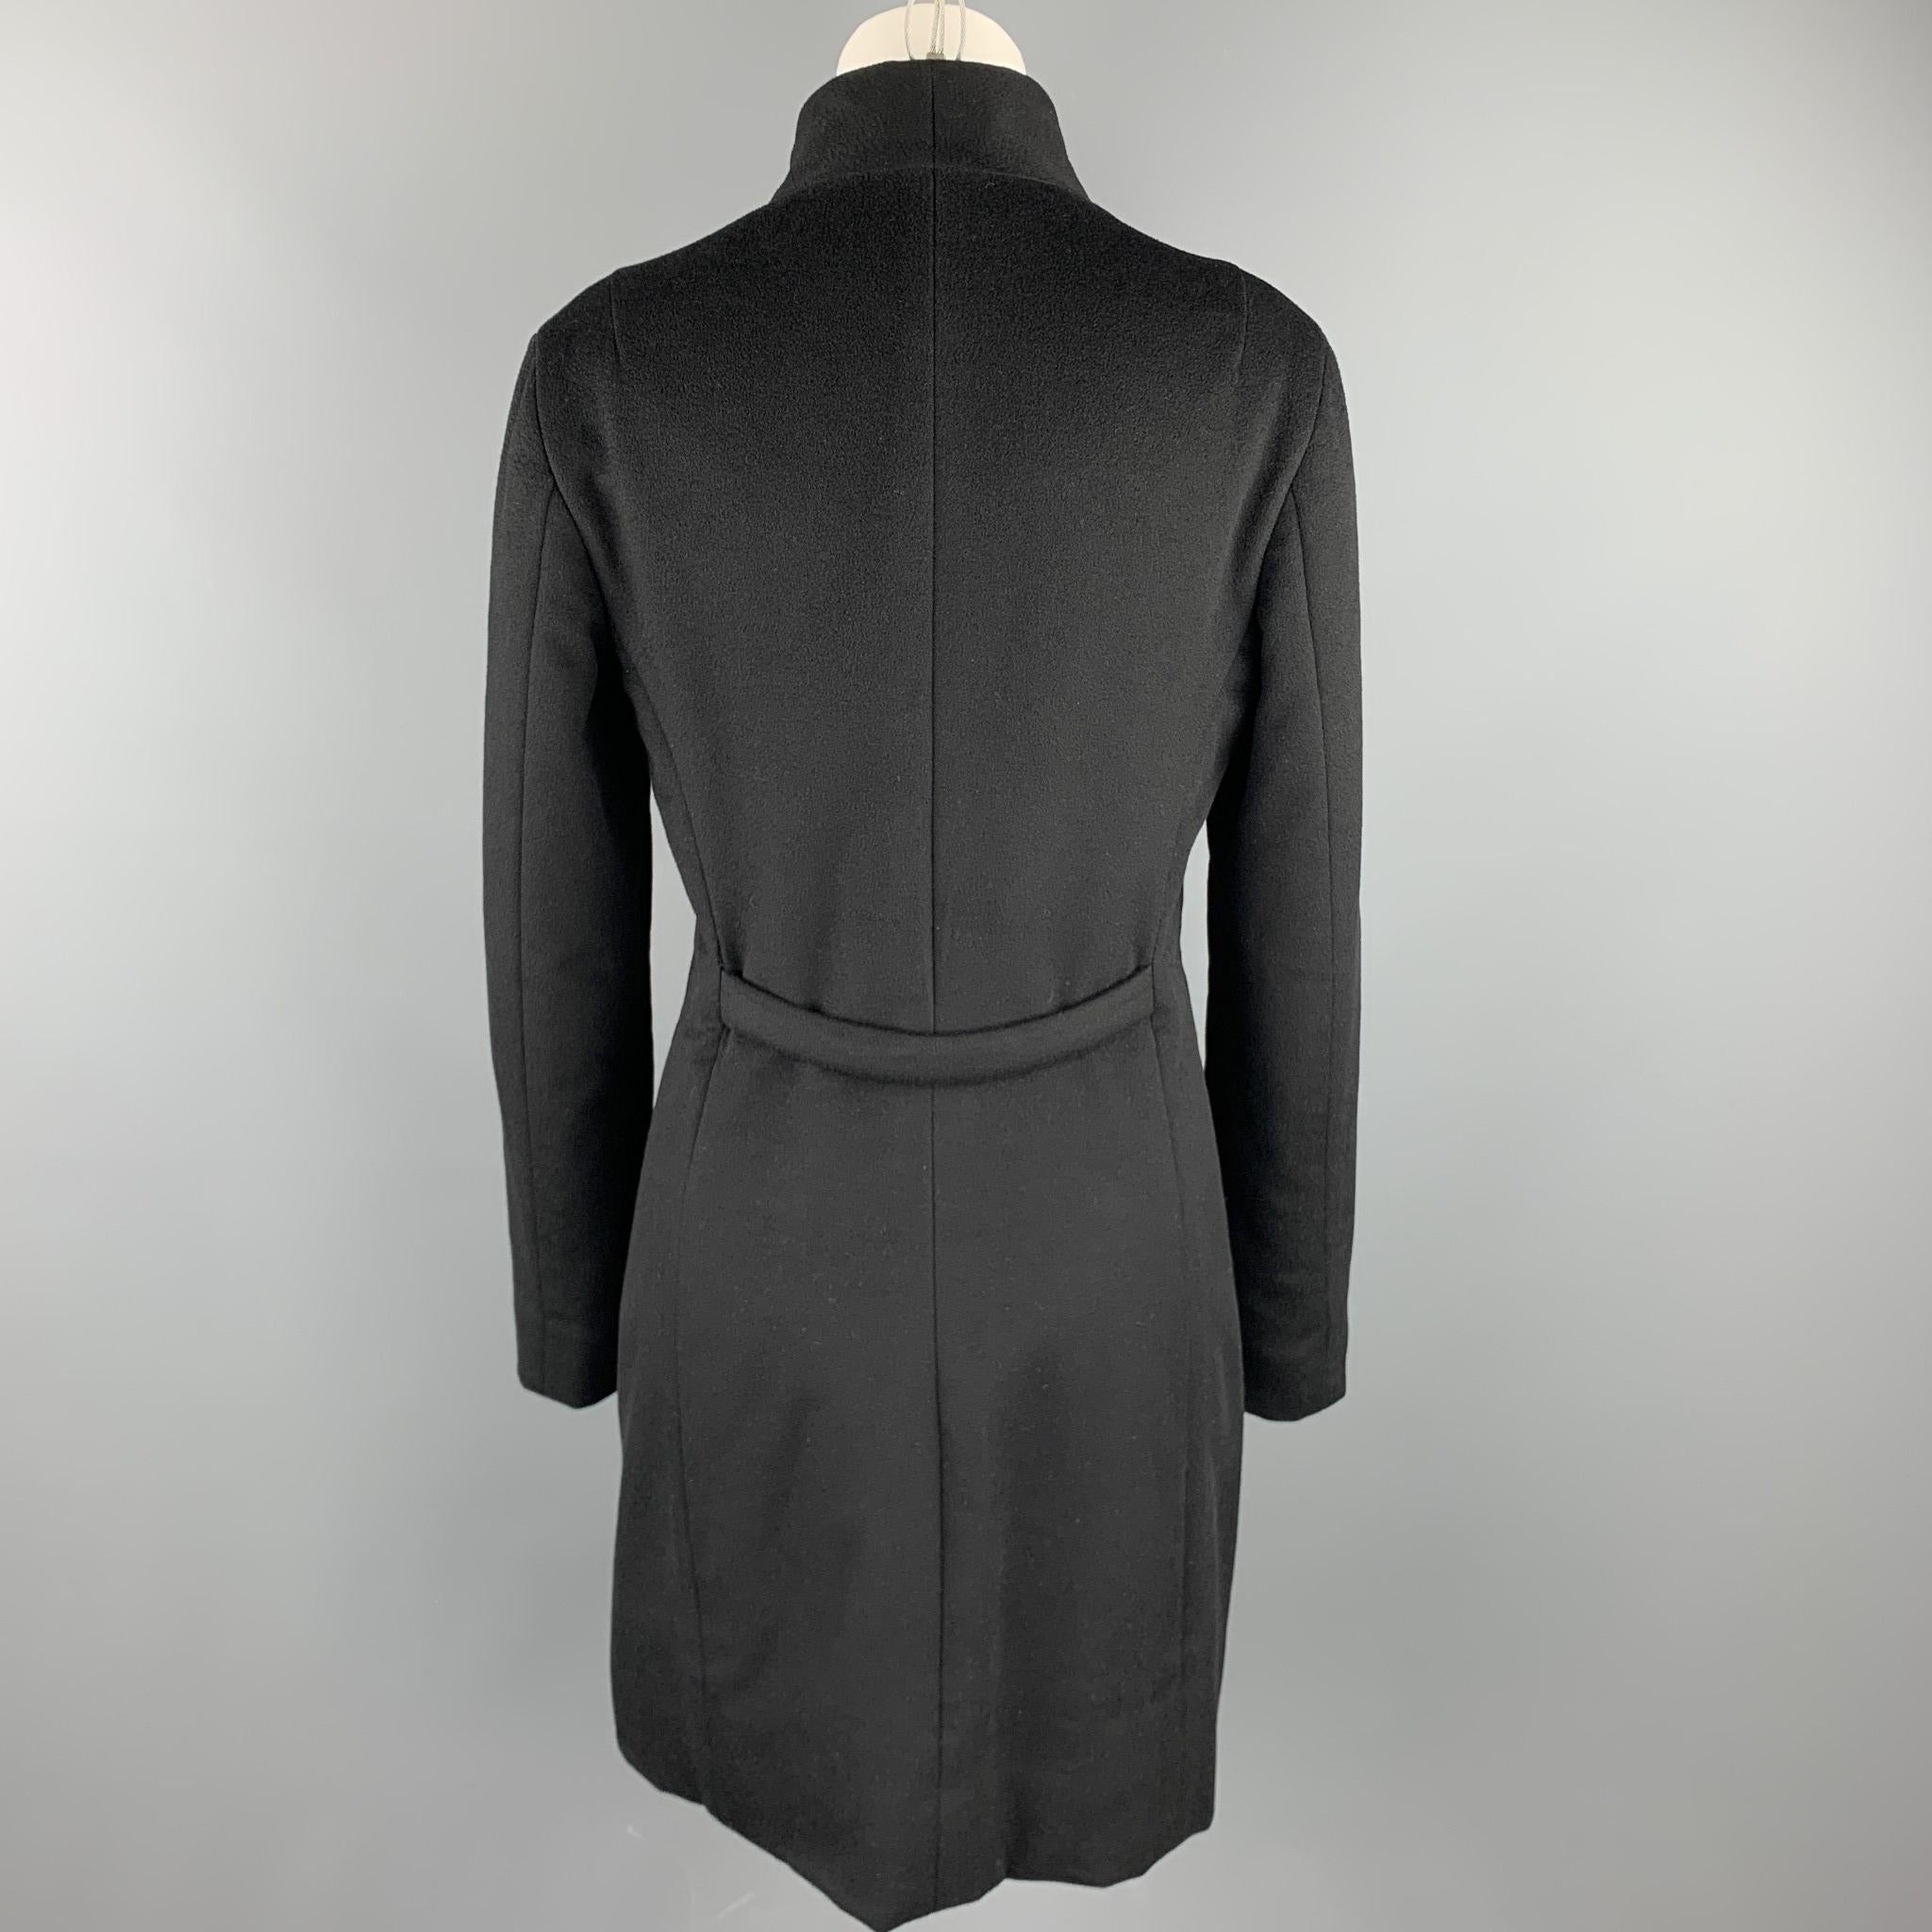 Women's JIL SANDER Size 4 Black Cashmere Blend Double Breasted Coat